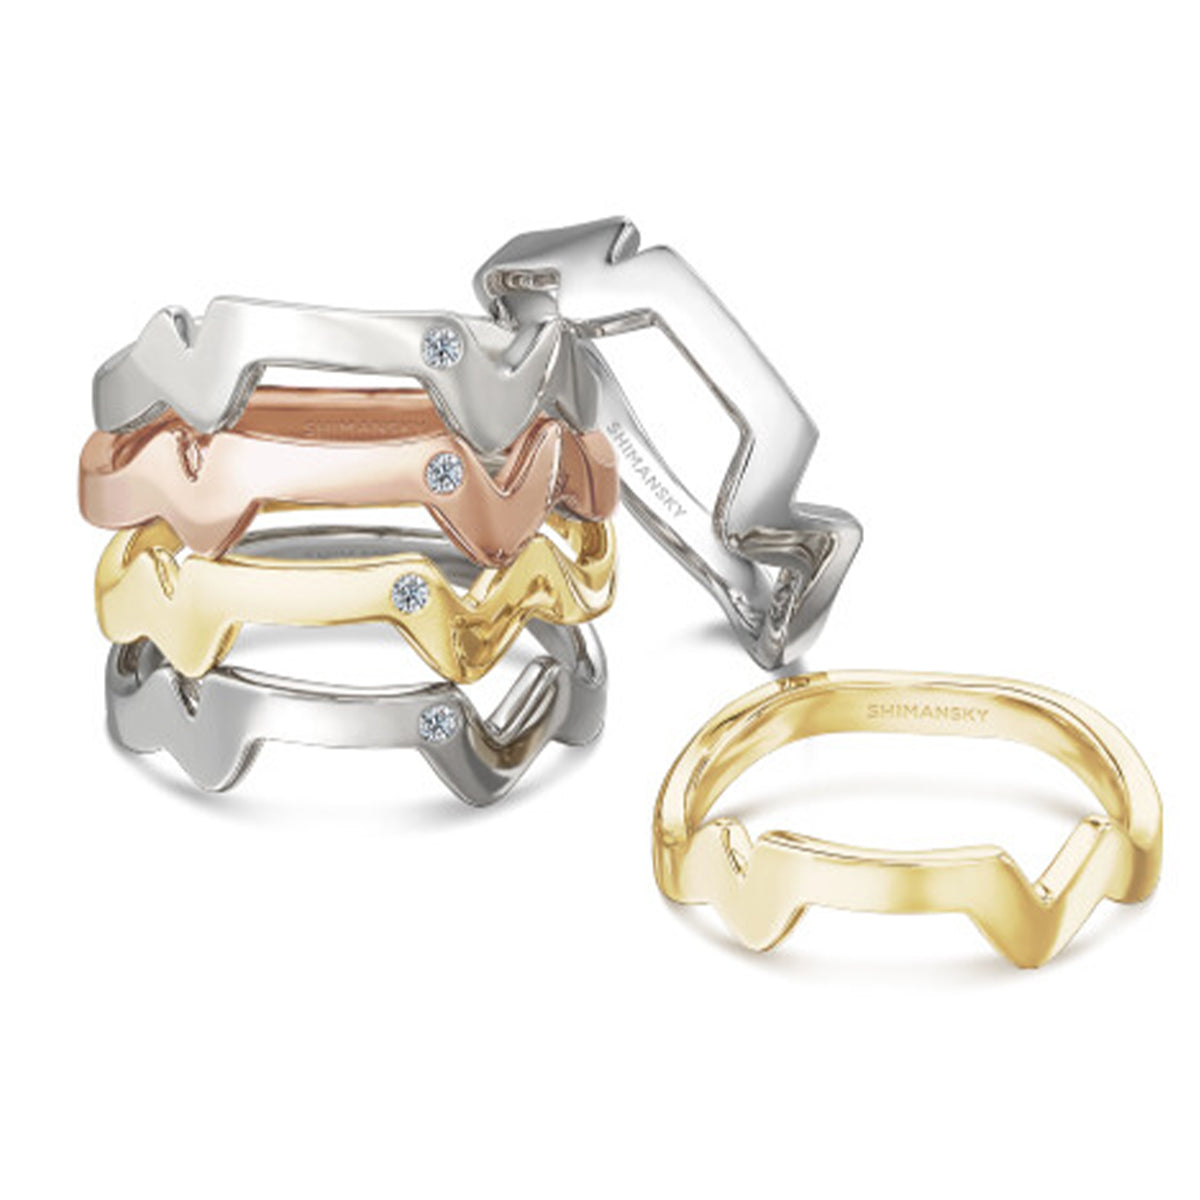 An assortment of Shimansky's Table Mountain diamond rings